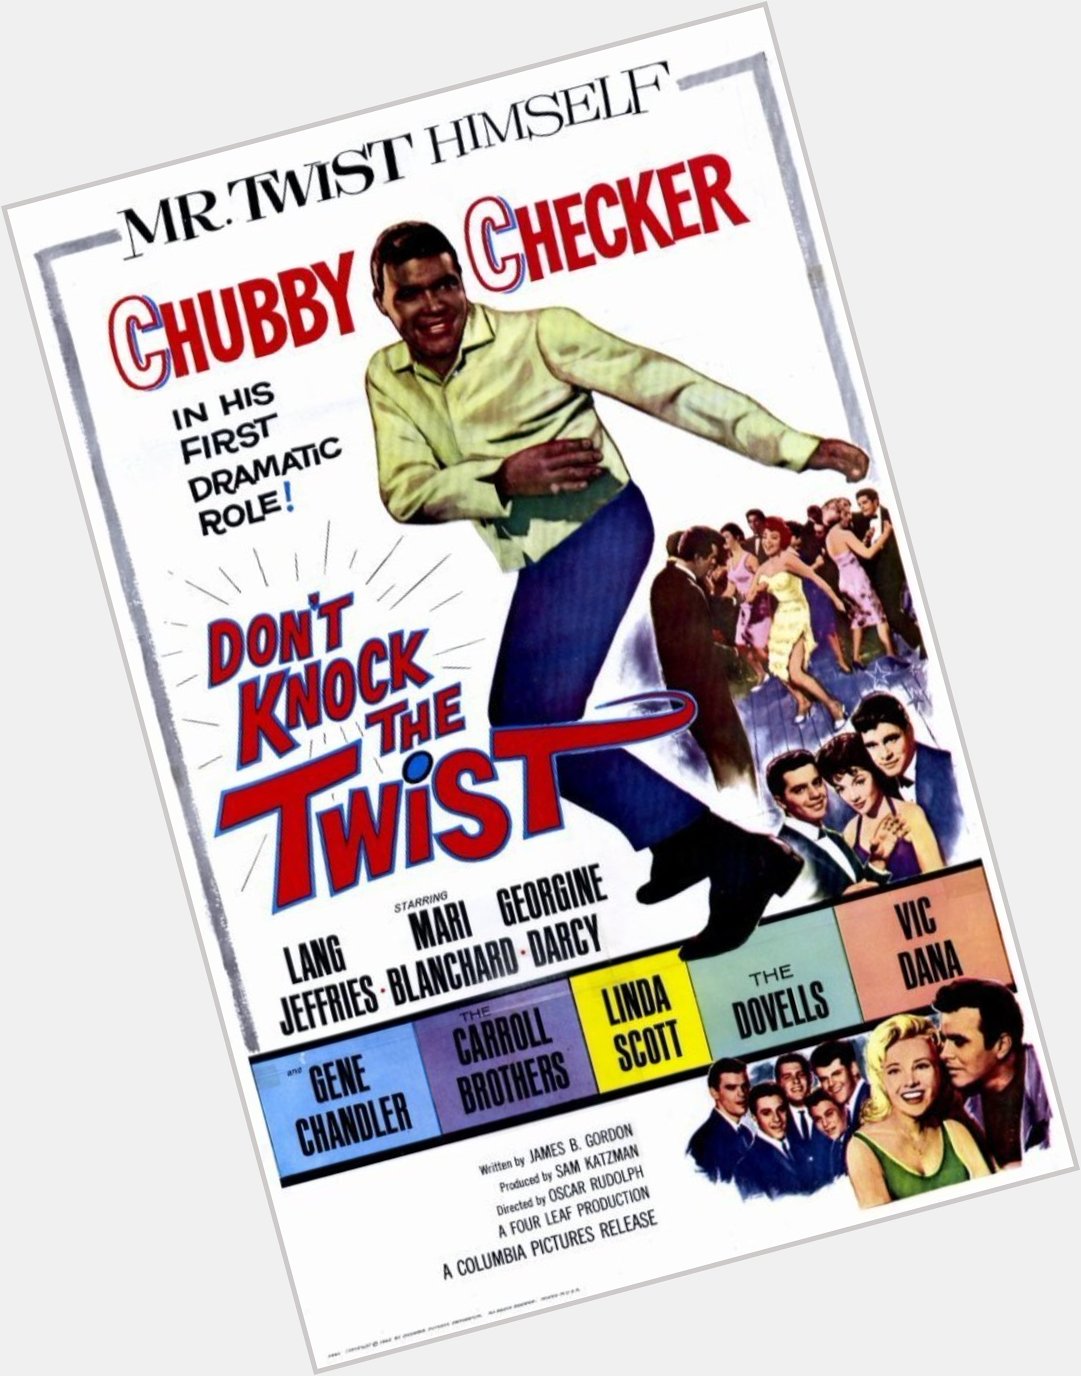 Happy Birthday to Chubby Checker, 76 today! 